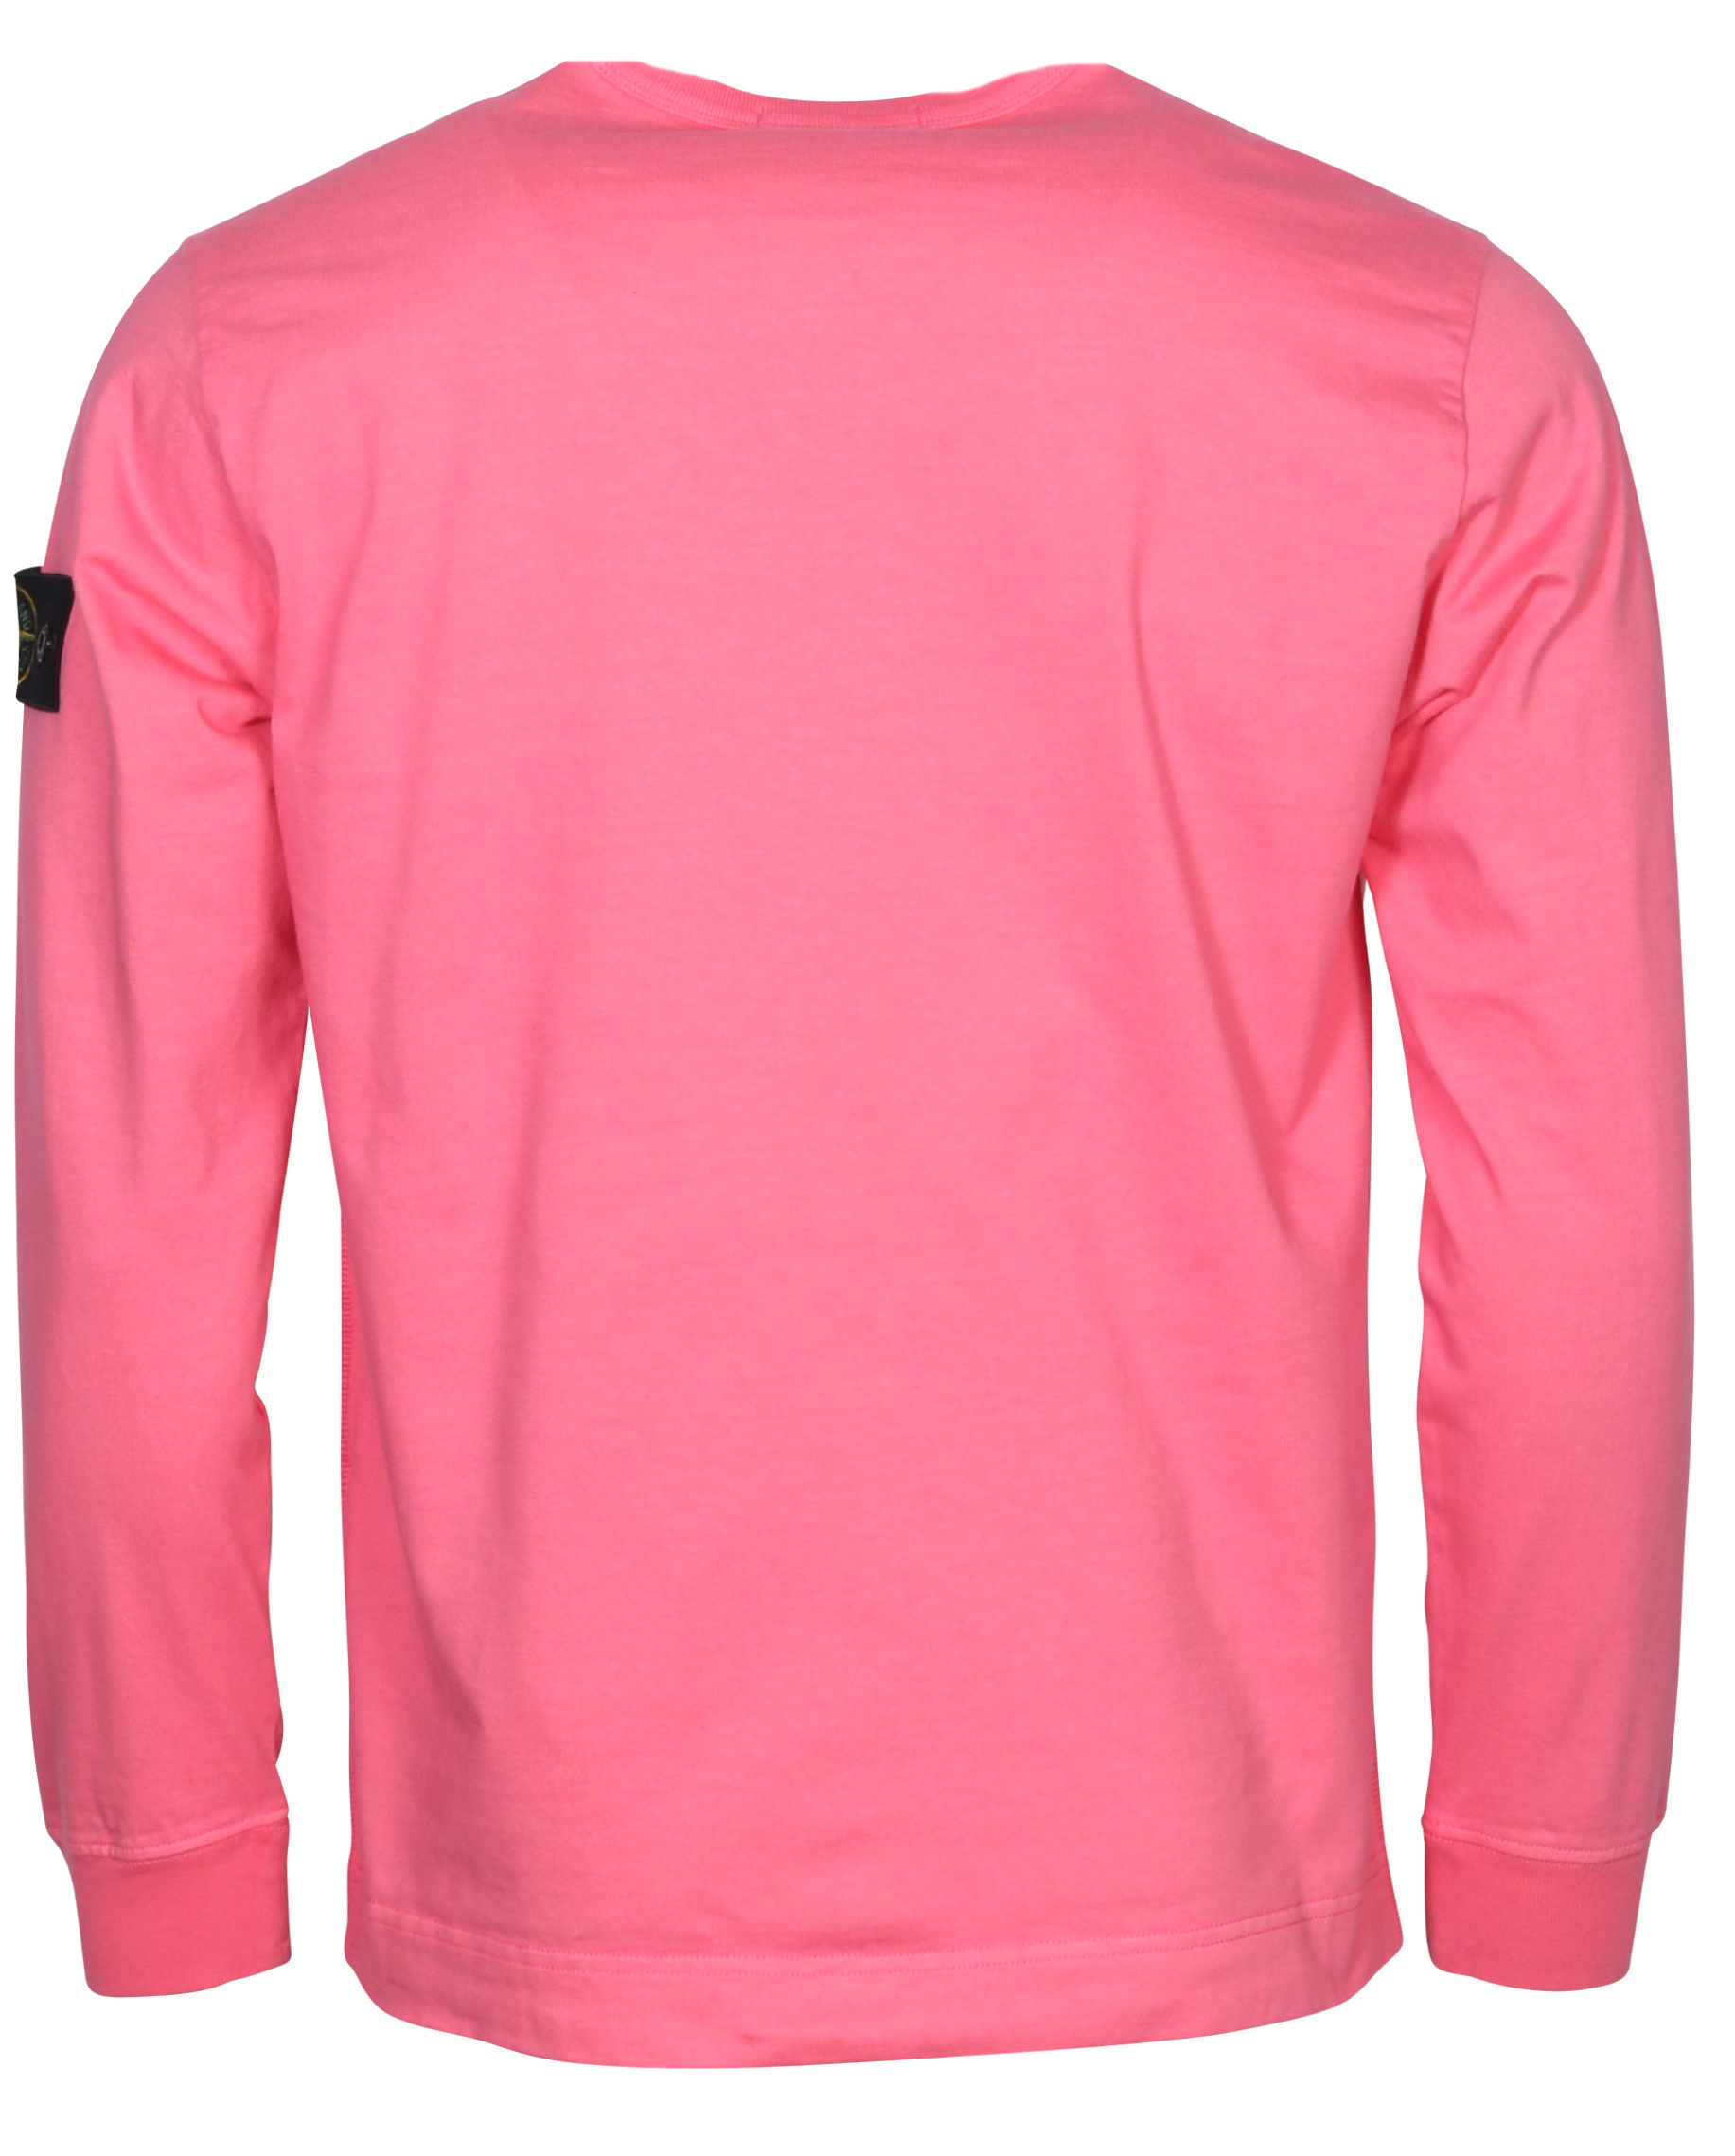 Stone Island Sweatshirt Pink M